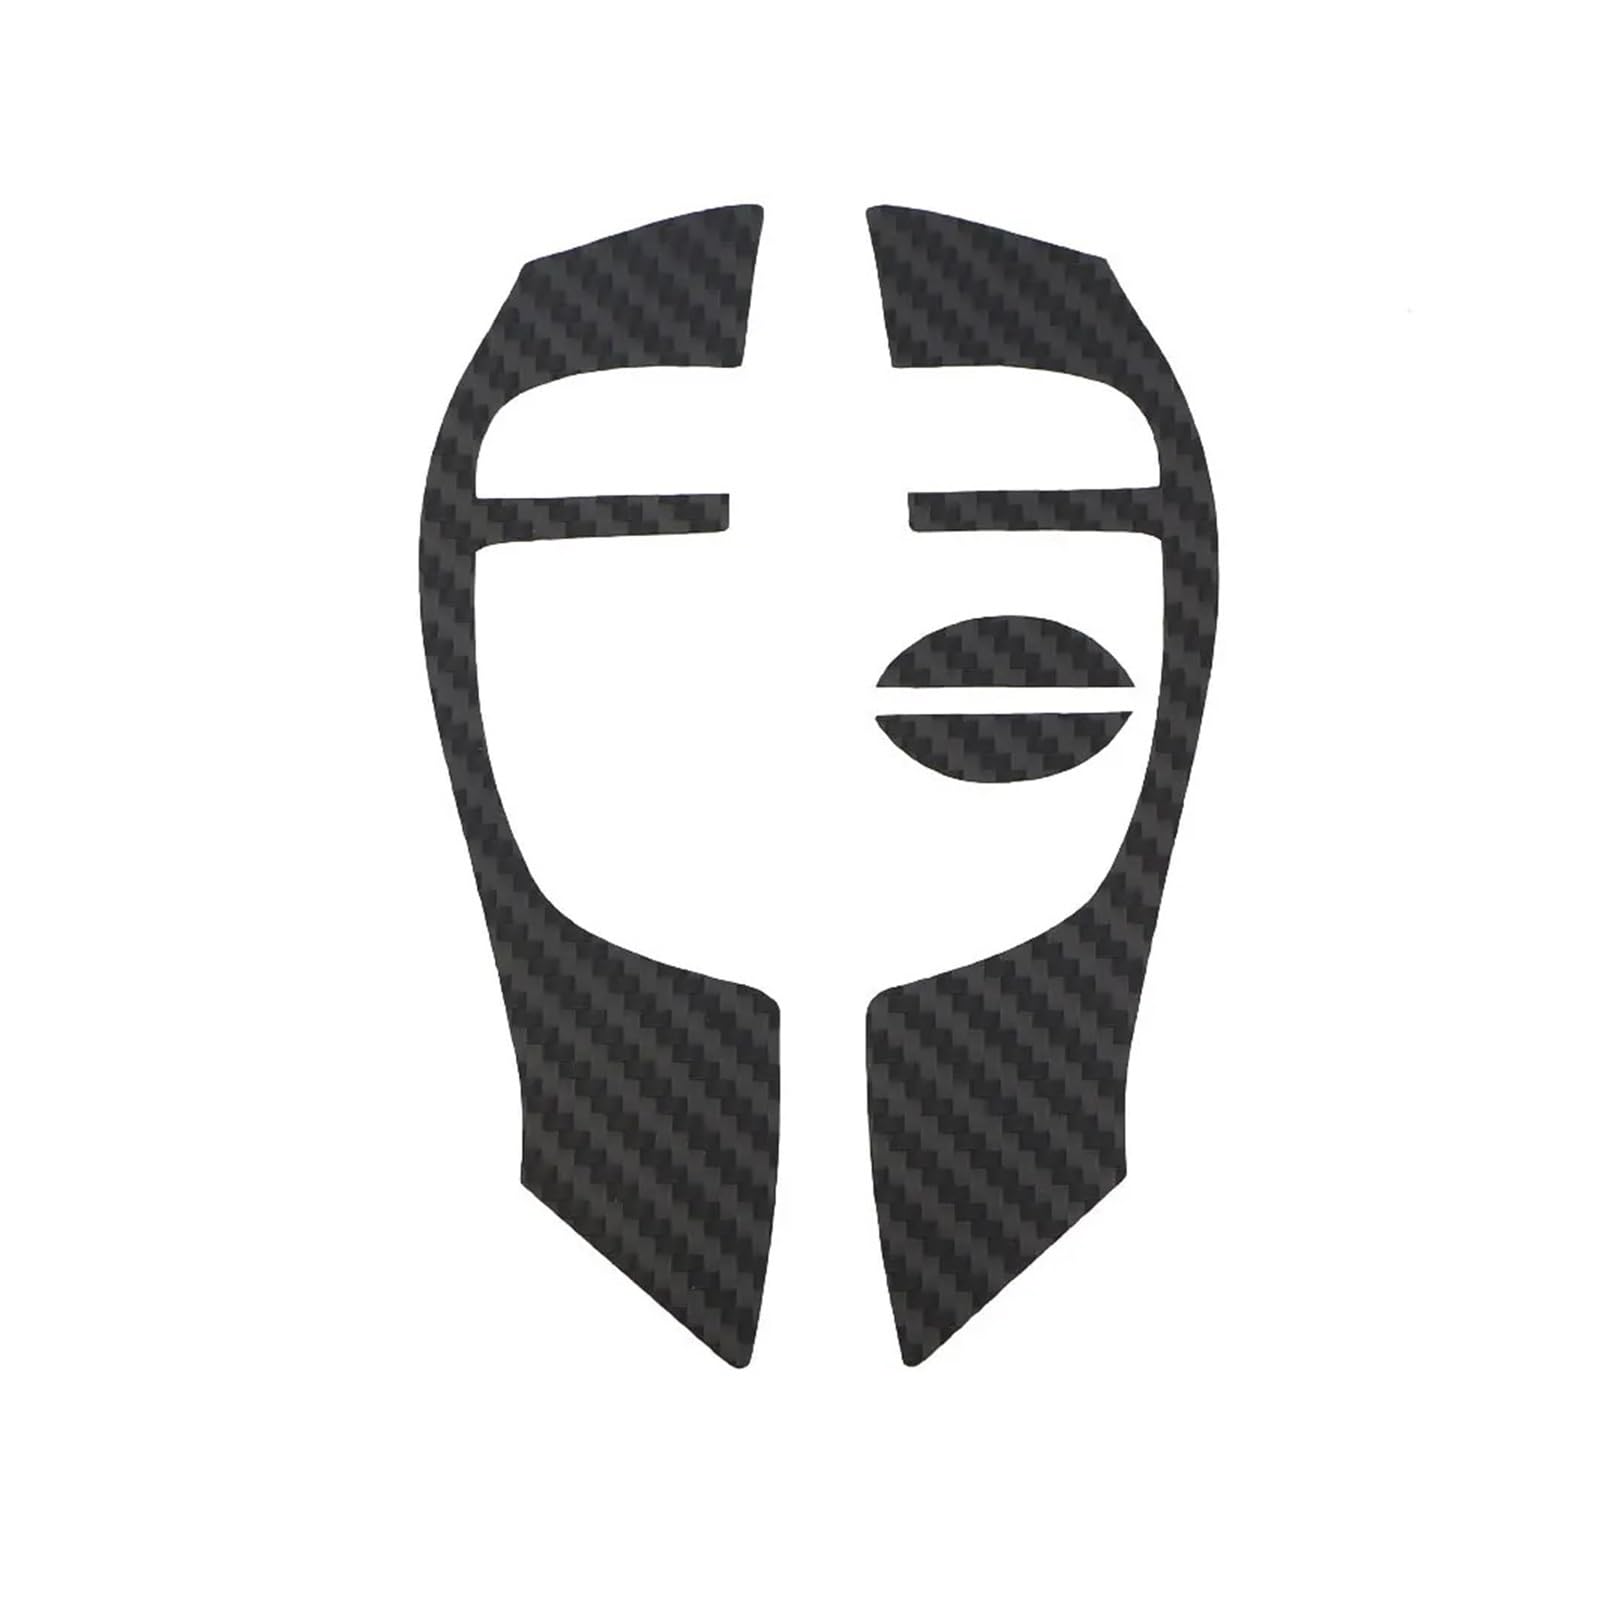 EQPWZG Auto-Carbonfaser-Lenkrad-Logo-Aufkleber, for Nissan, for X-TRAIL, for X-Trail, for Xtrail, for Rogue 2014 2015 2016 2017, 3 Farben Lenkradverkleidung(Black symmetry) von EQPWZG